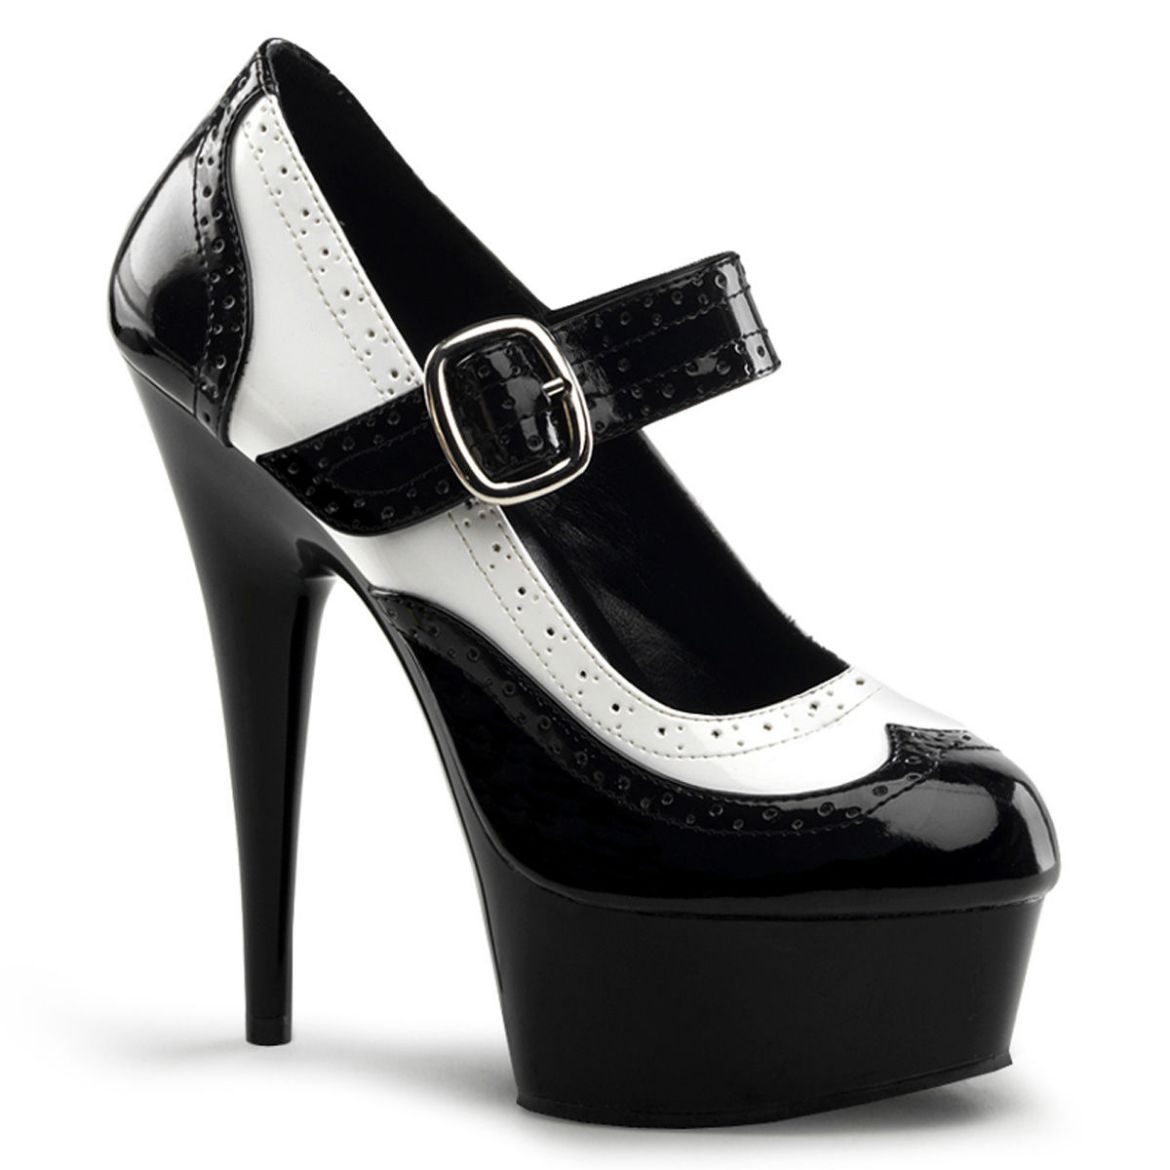 Product image of Pleaser DELIGHT-688 Black-White Patent/Black 6 inch (15.2 cm) Heel Mary Jane Spectator Platform Pump Court Pump Shoes